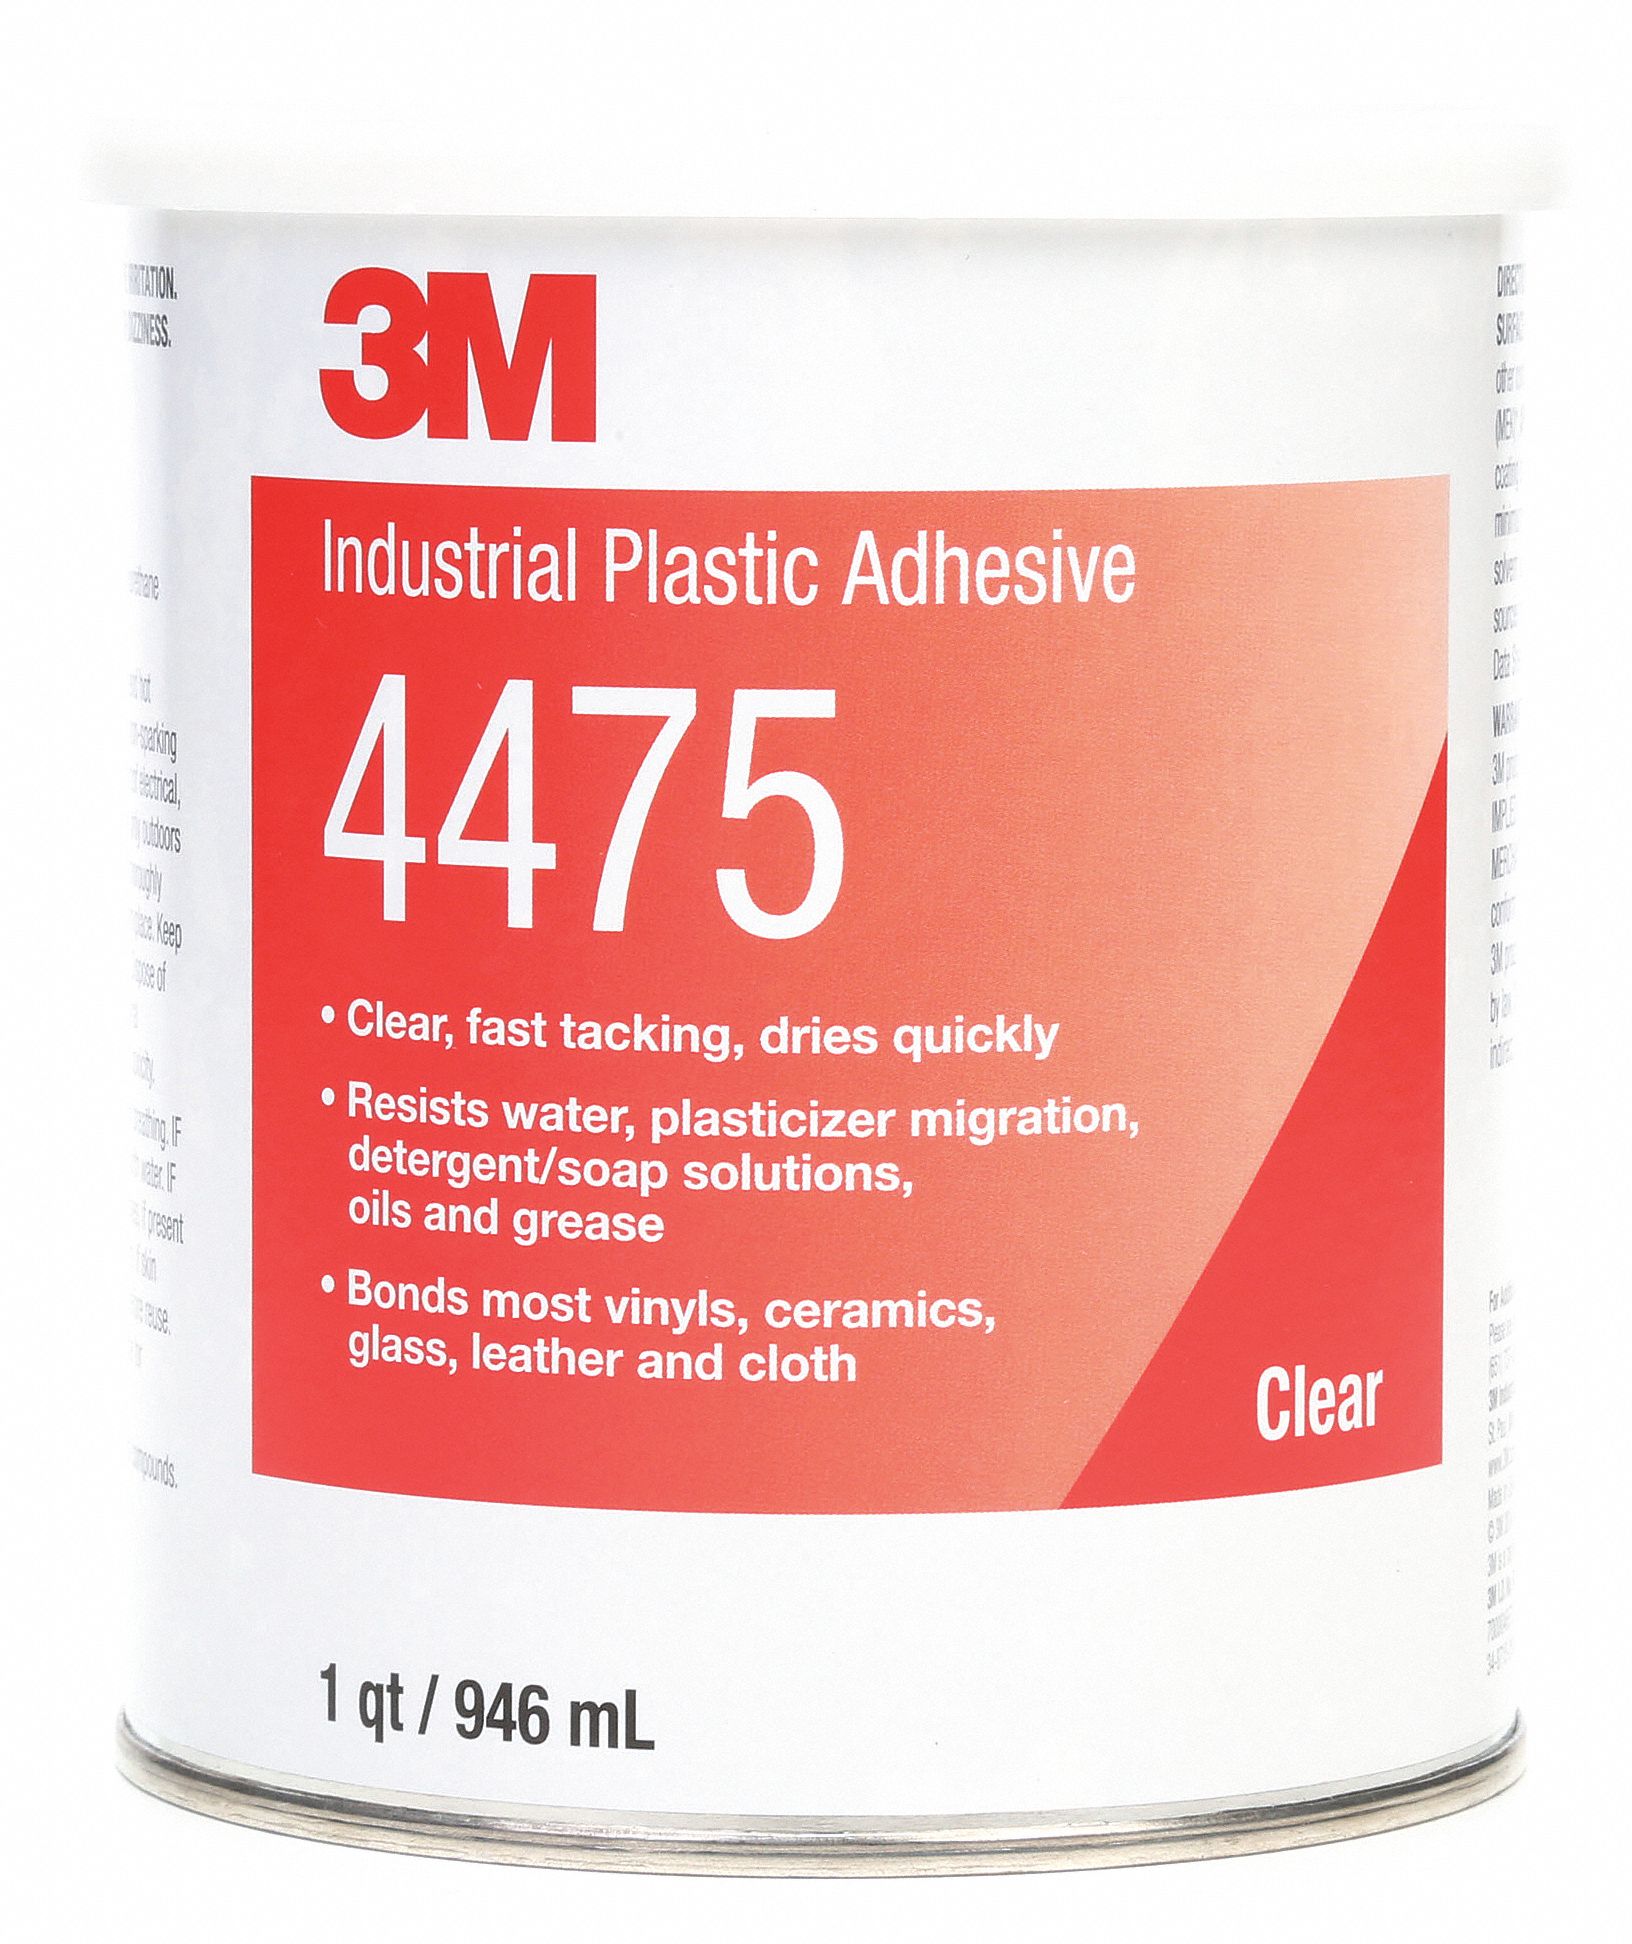 3m-clear-plastic-adhesive-1-qt-can-general-purpose-2rue9-4475